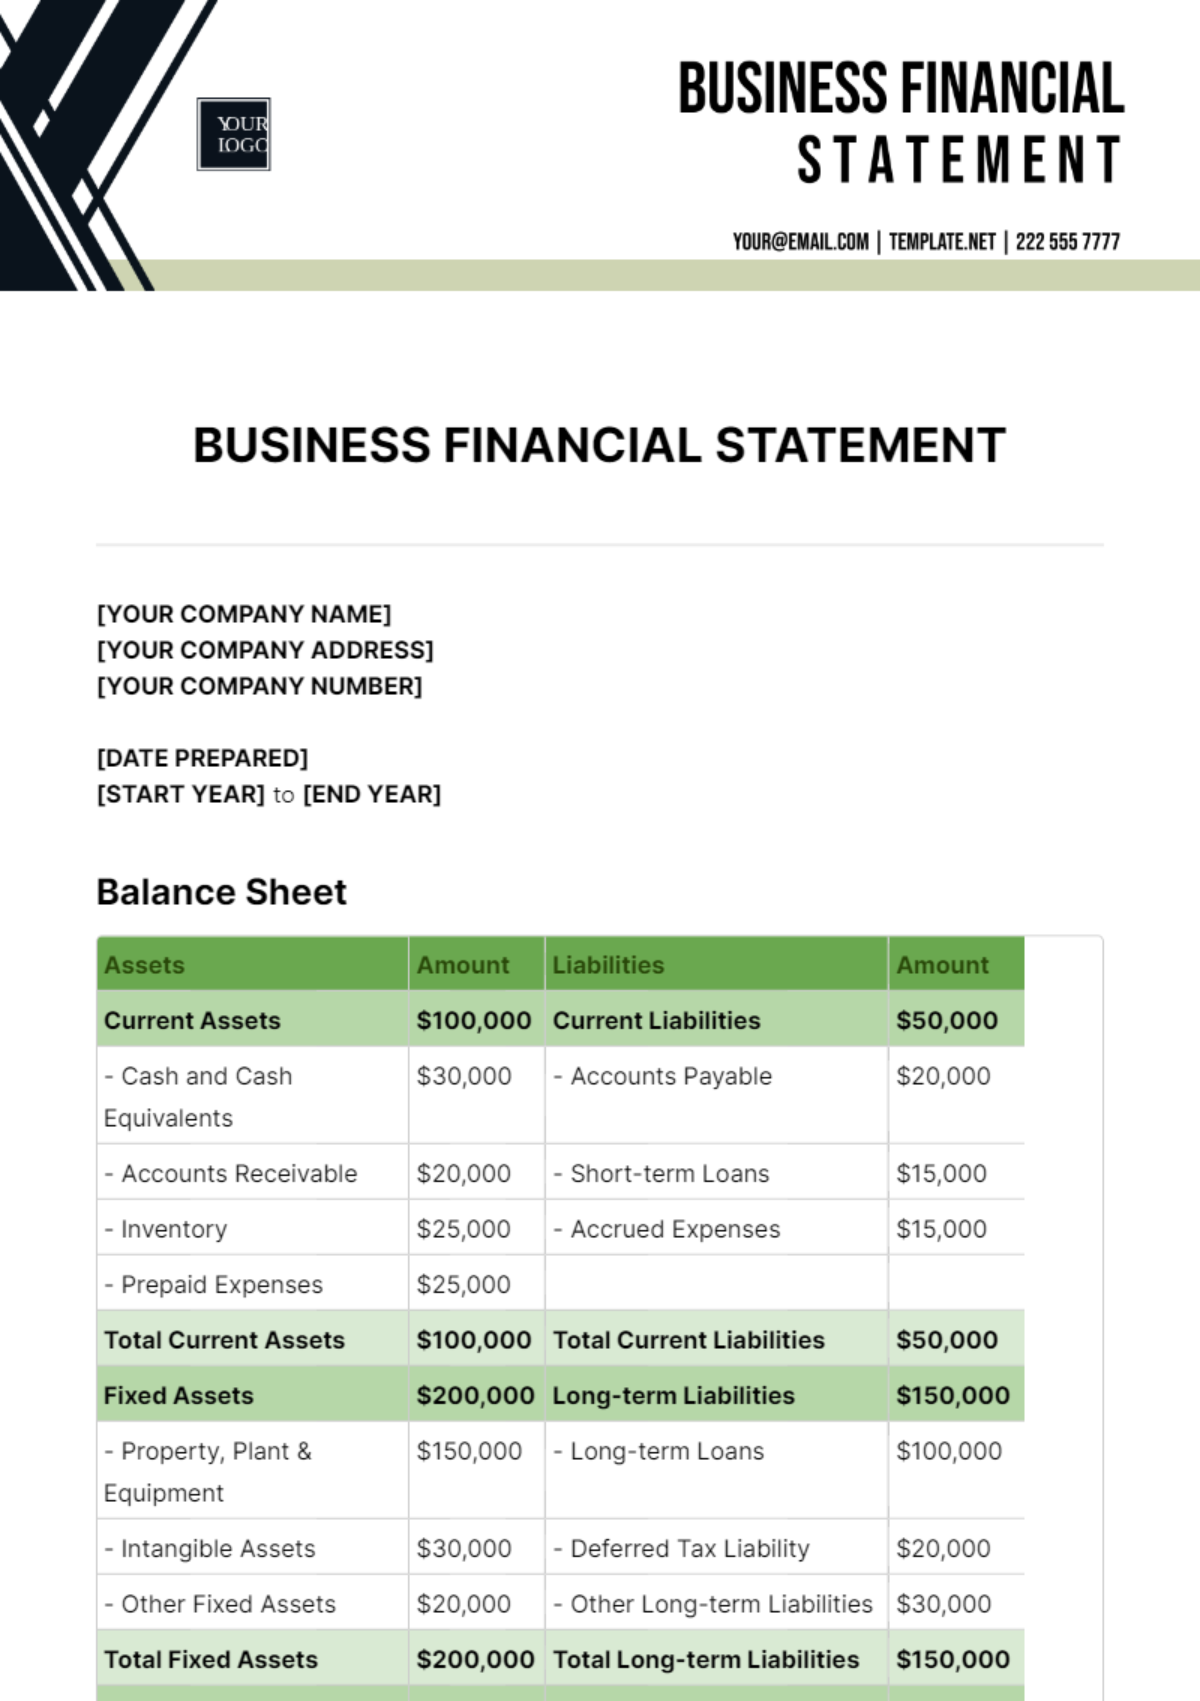 Business Financial Statement Template